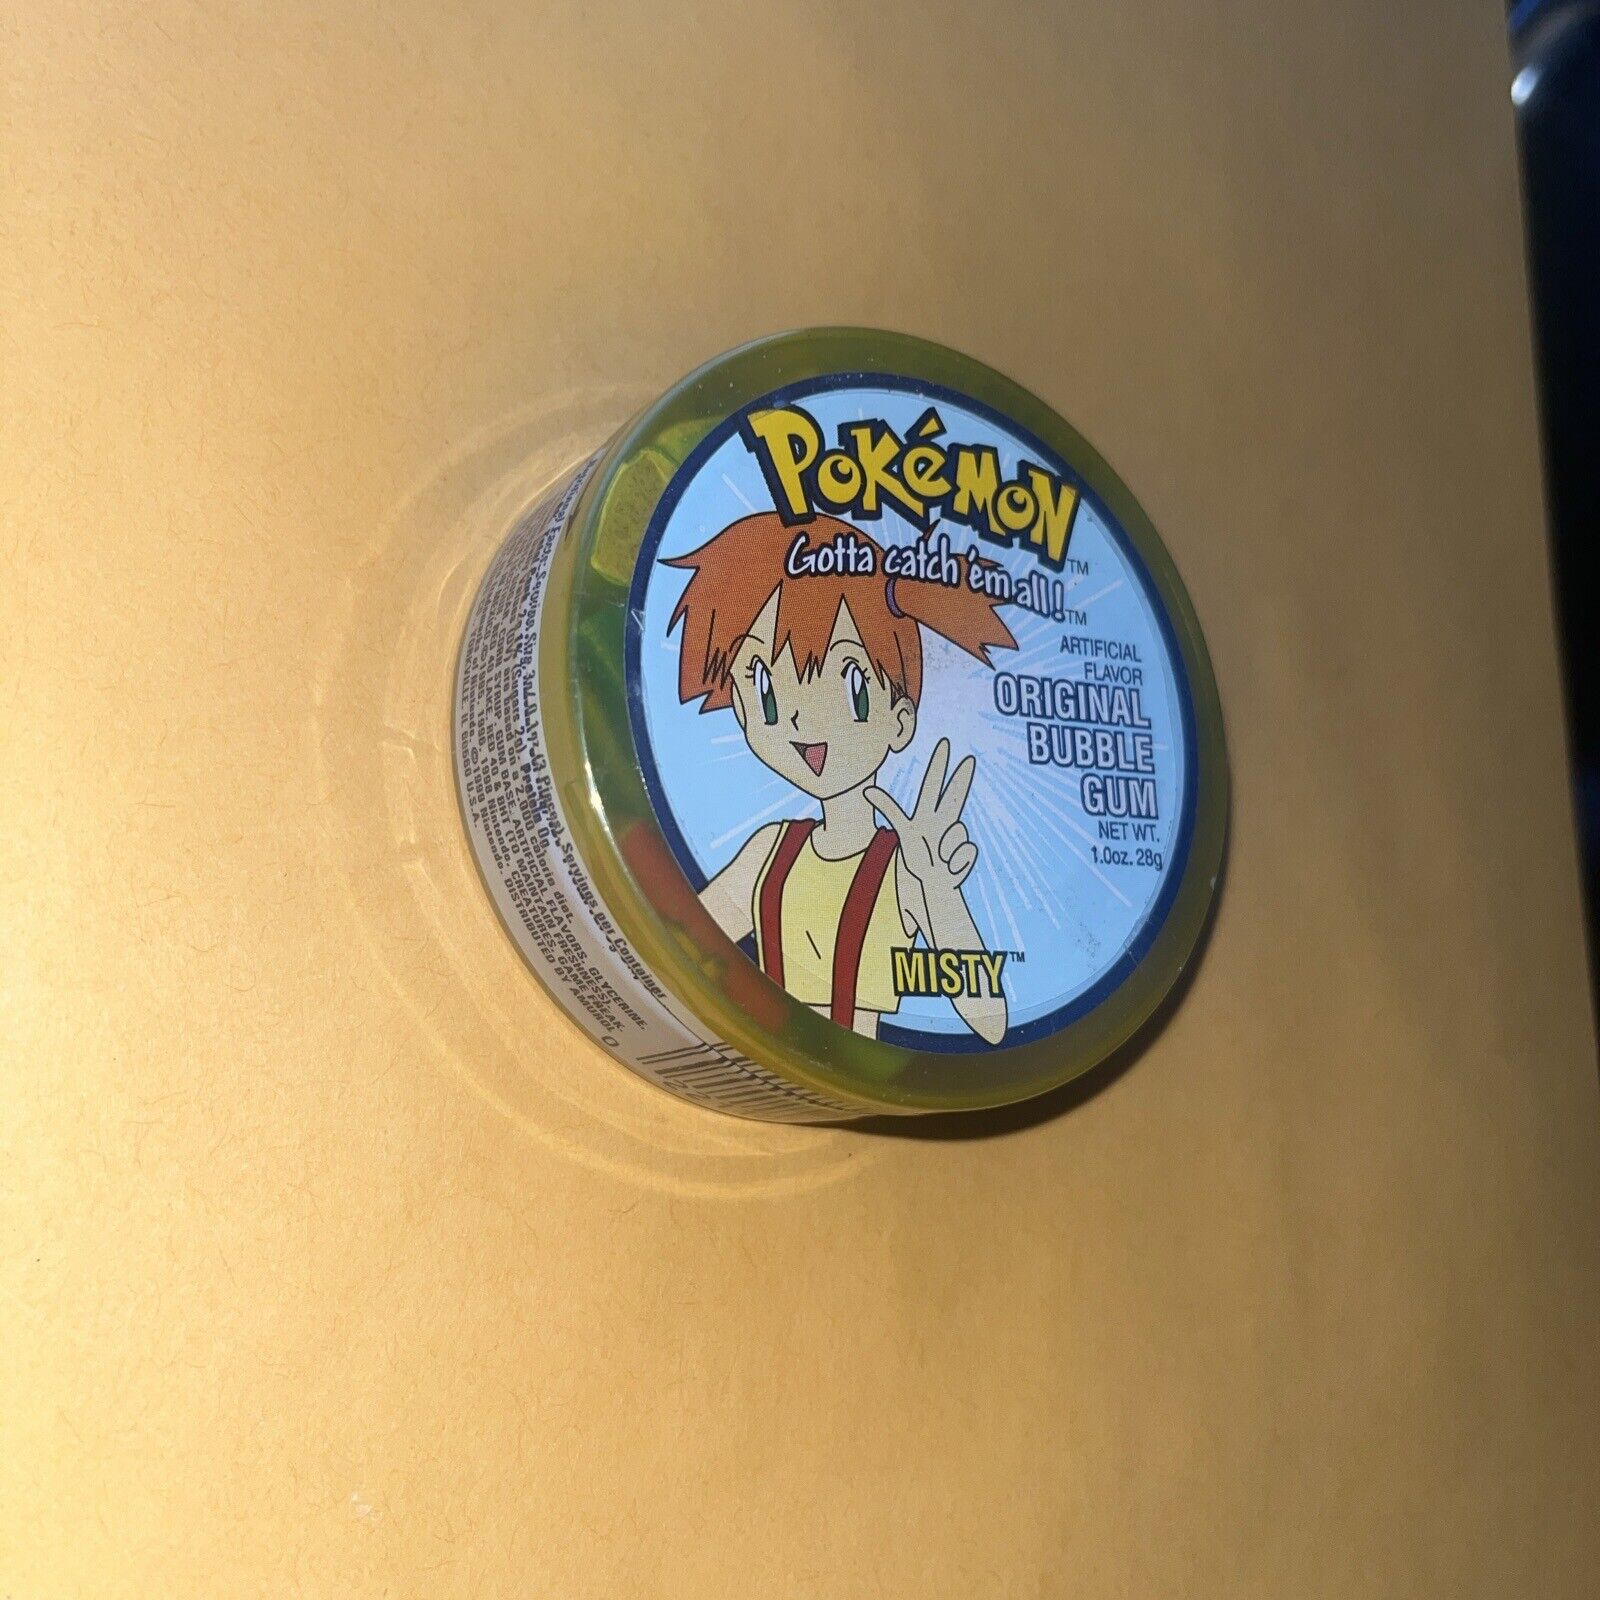 VTG SEALED RARE Pokémon Gum 1 oz Pack Misty. MISTY. Rare look